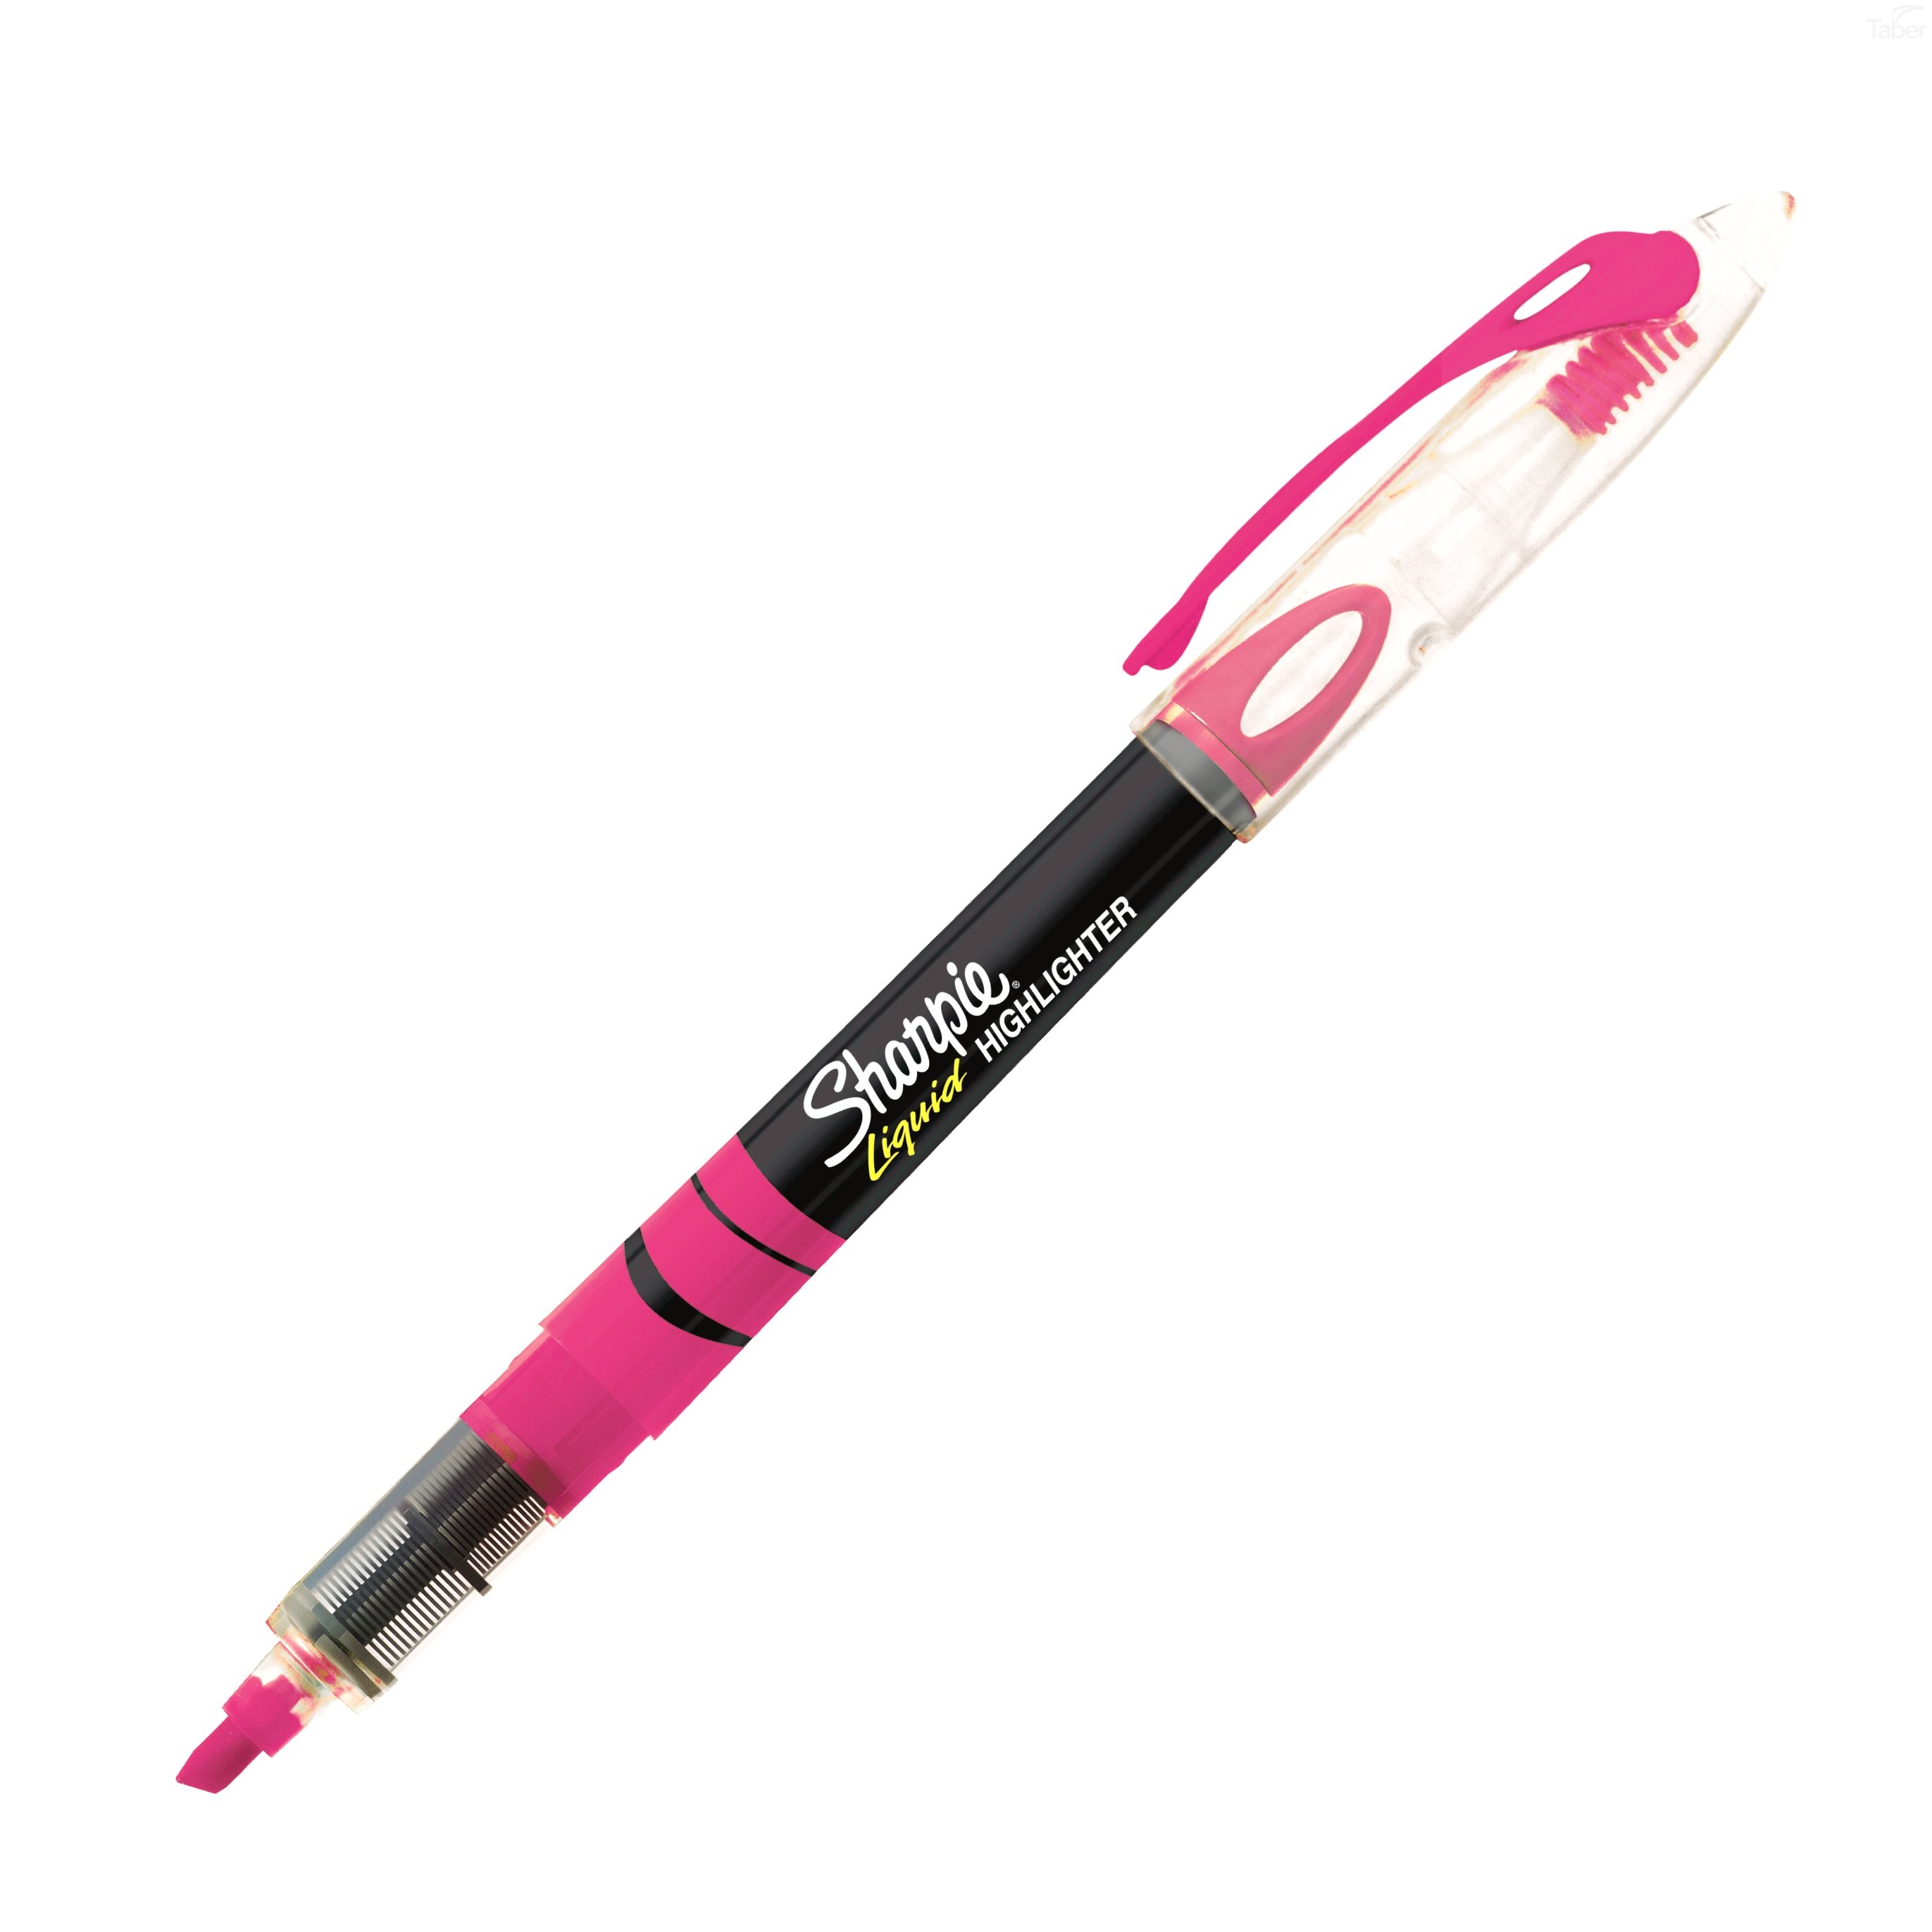 Sharpie Accent Liquid Pen Style Highlighter, Pink